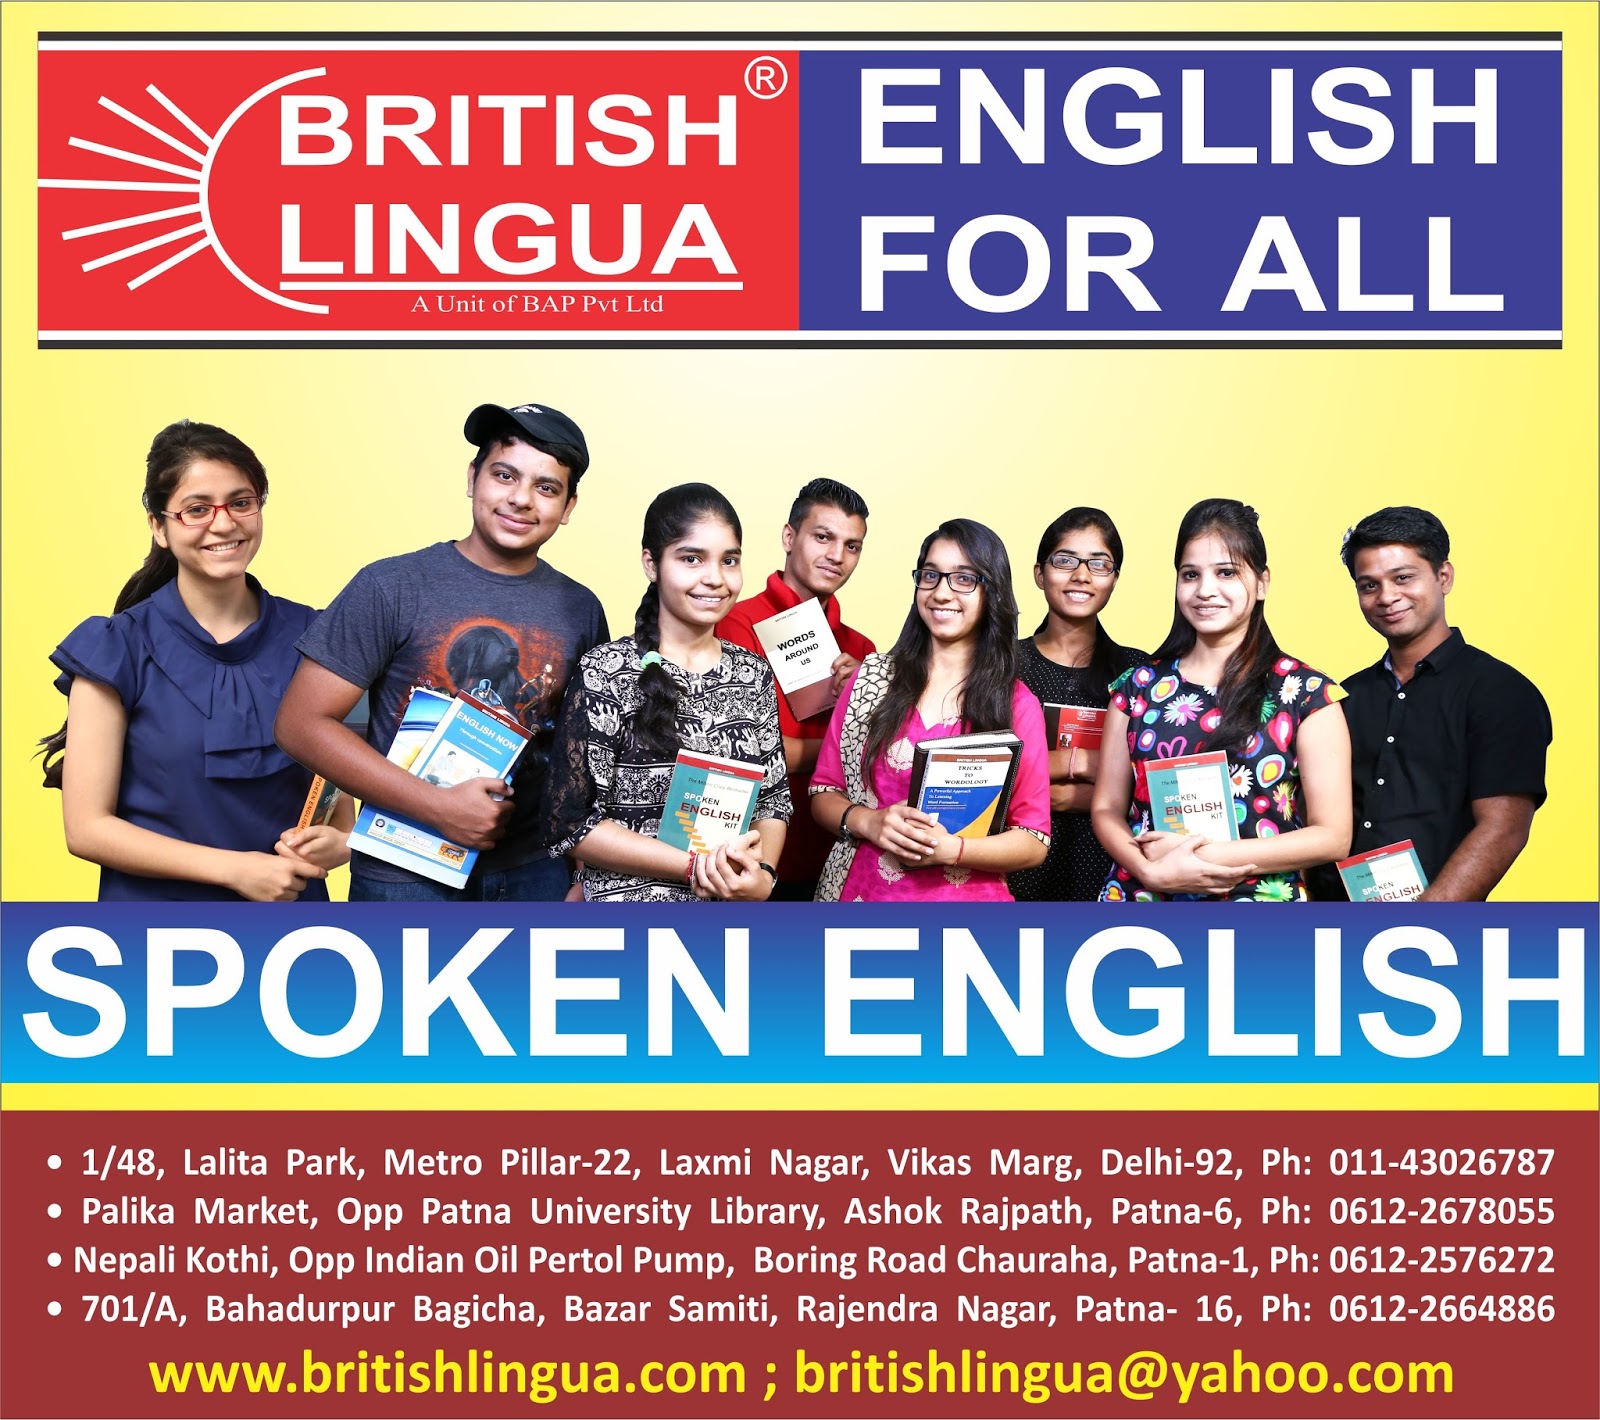 Spoken English. Spoken English classes. English speaking Zone. English spoken here